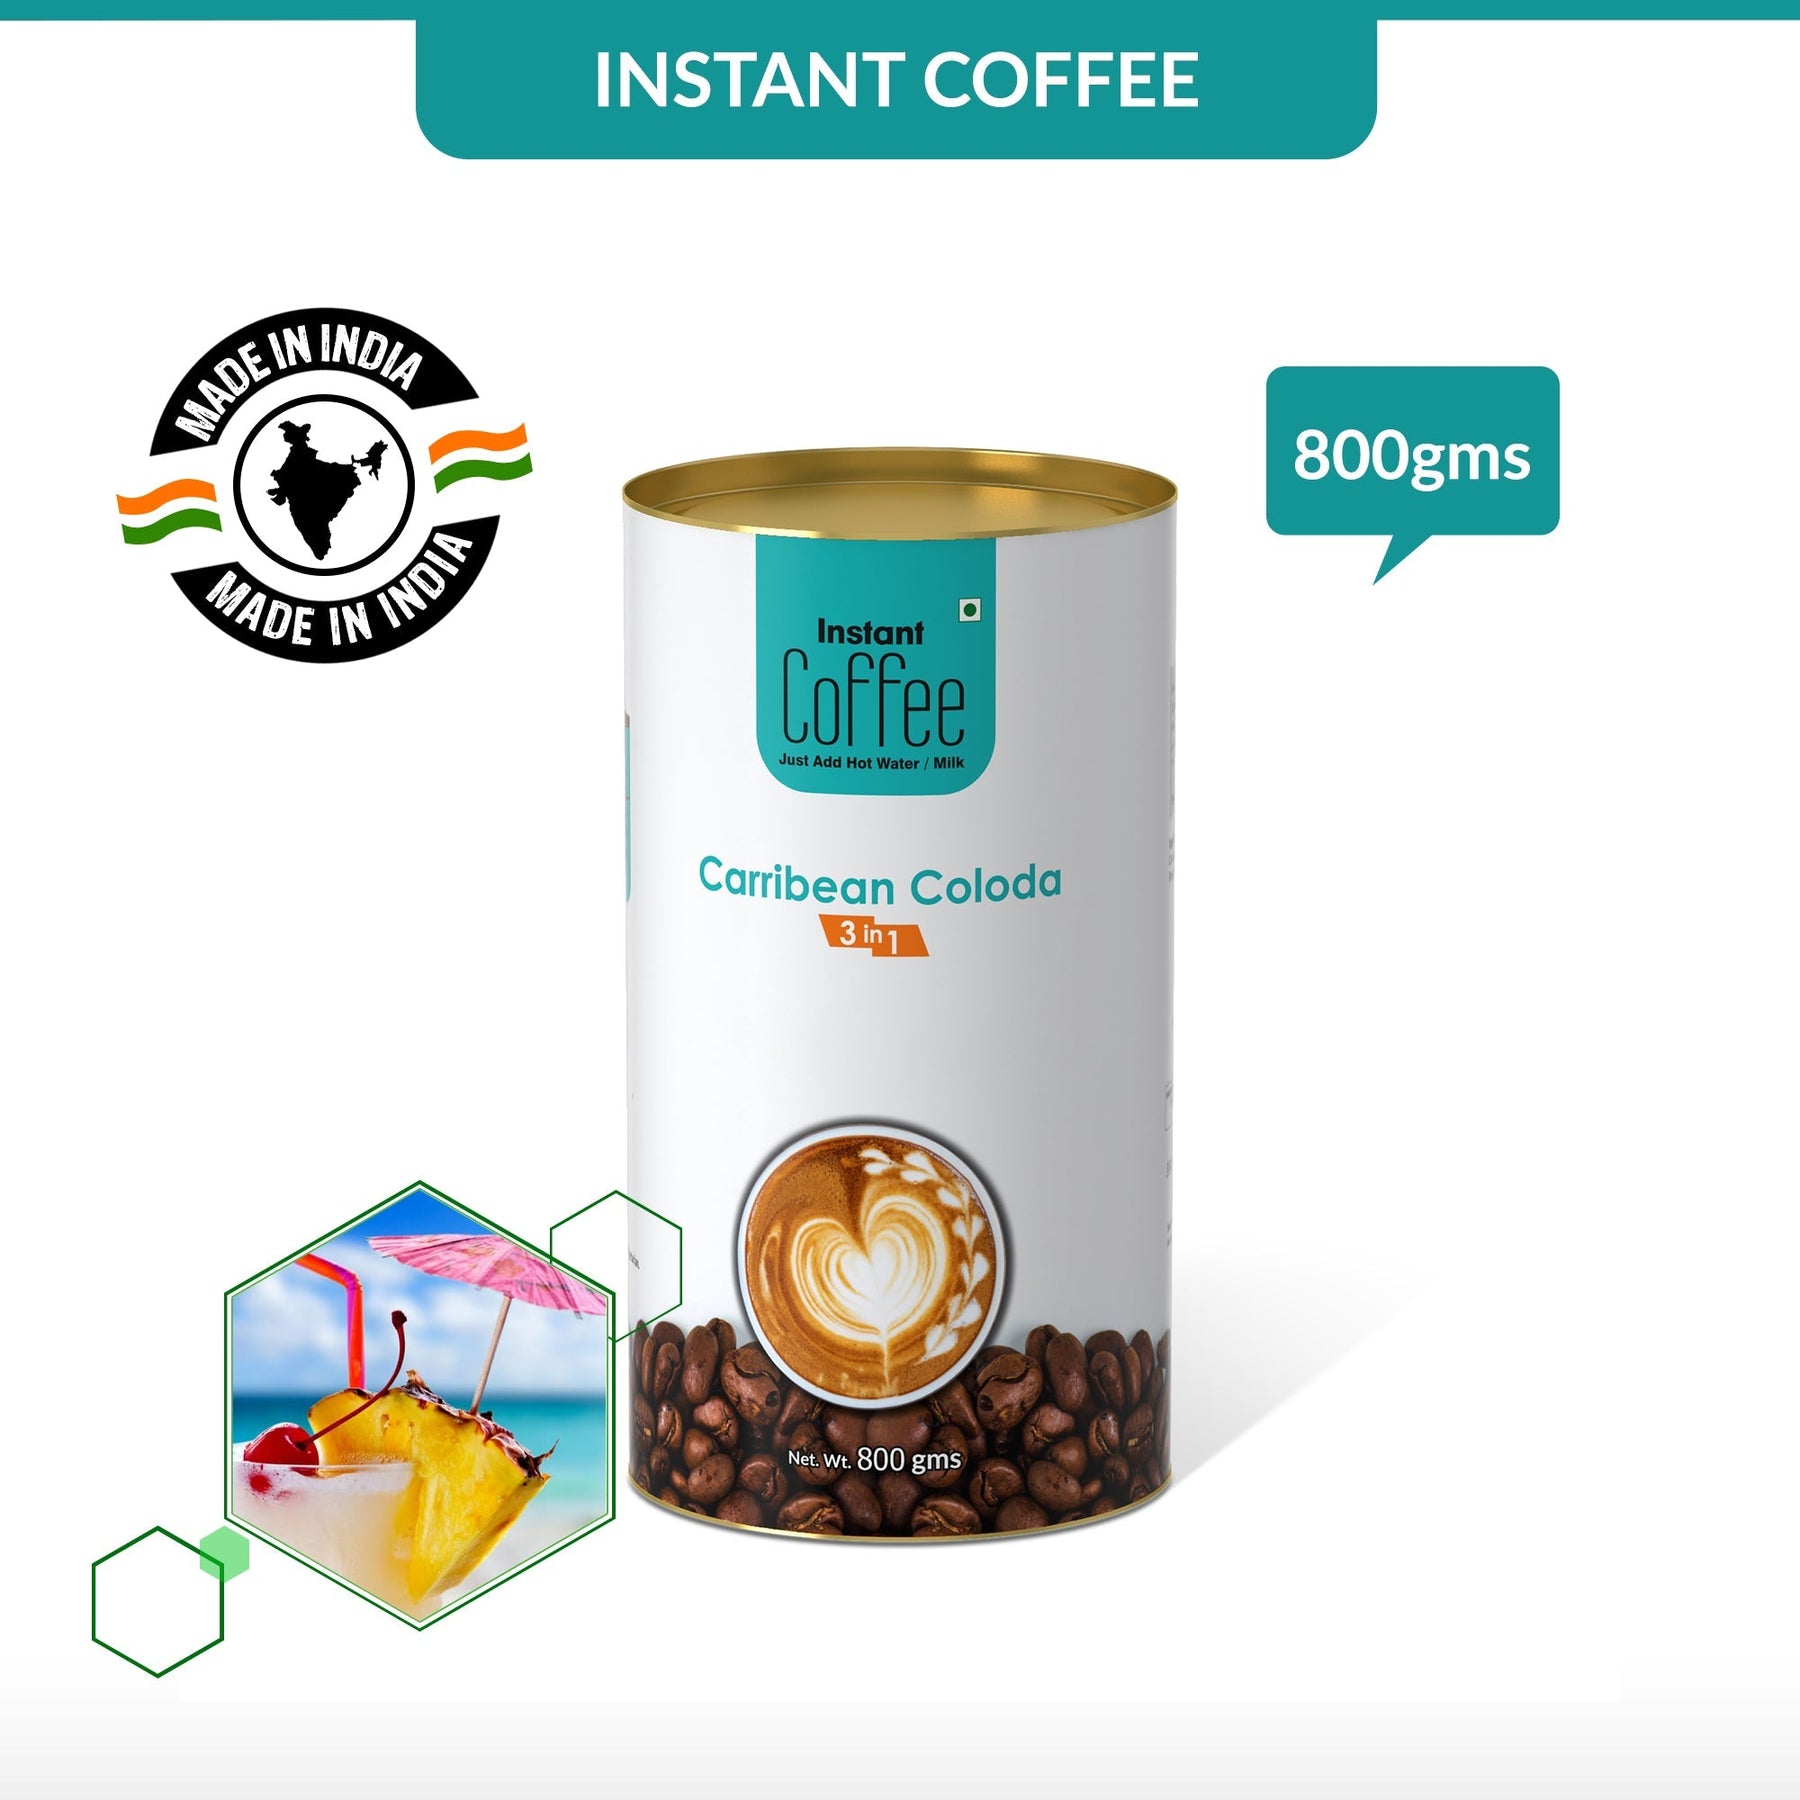 Carribean Coloda Instant Coffee Premix (3 in 1) - 800 gms